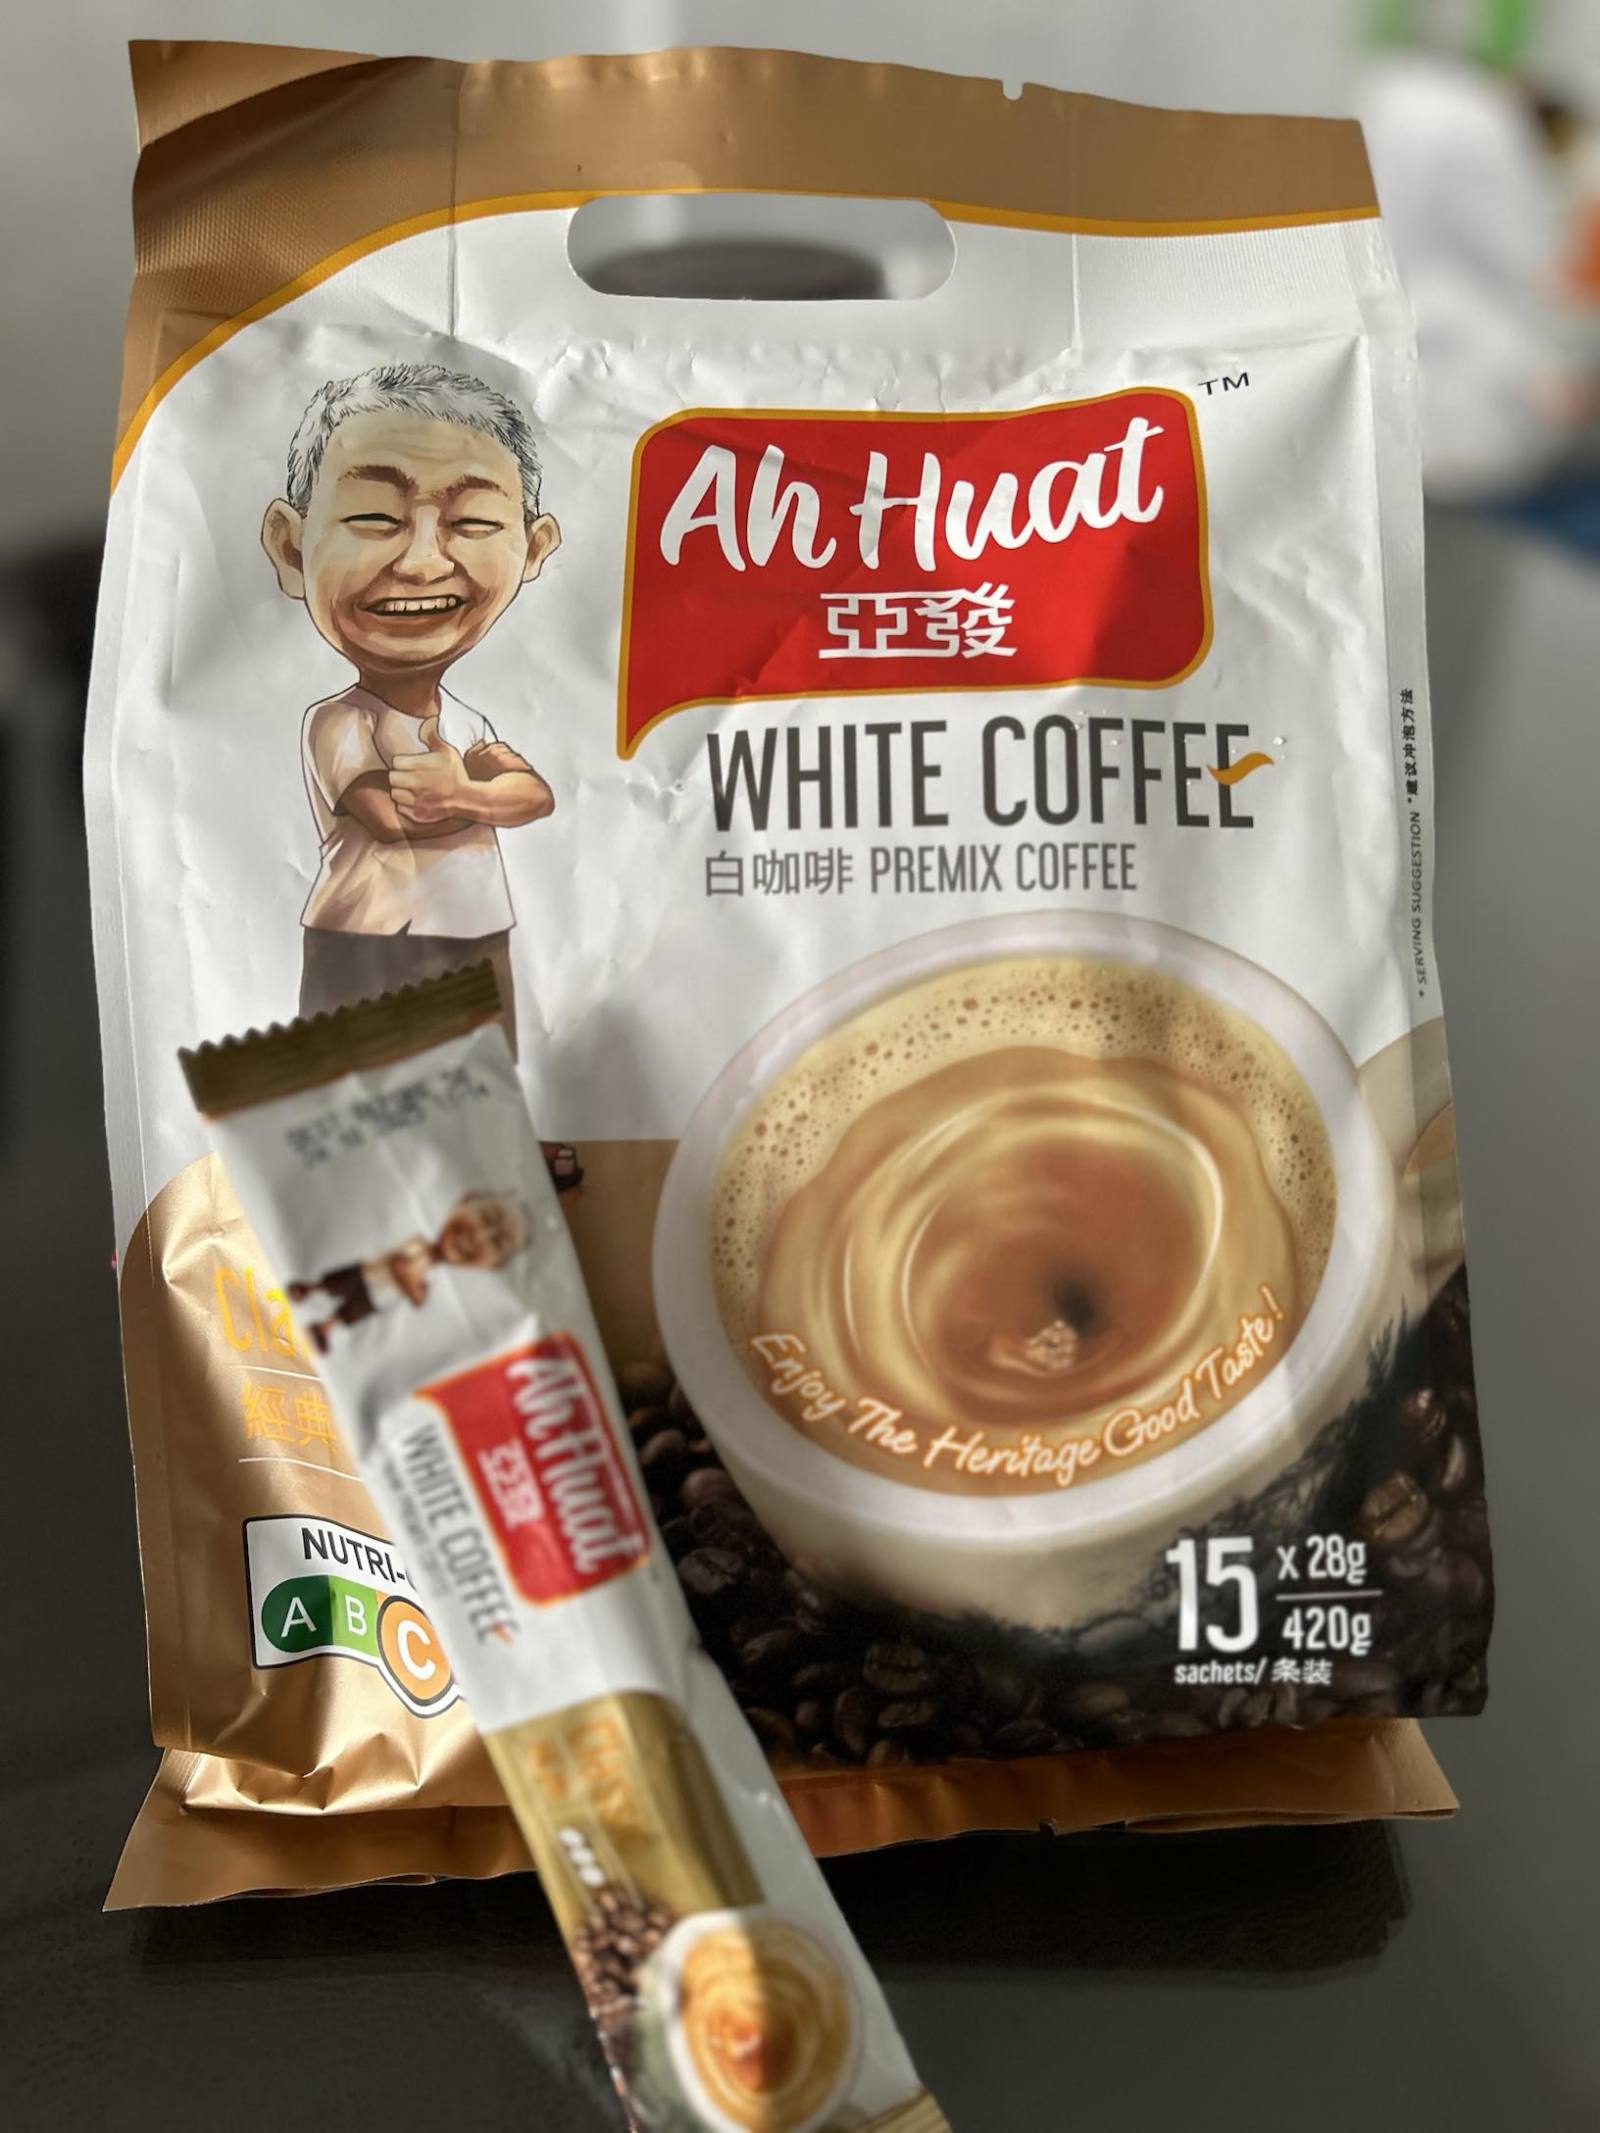 Ah Huat Classic white coffee